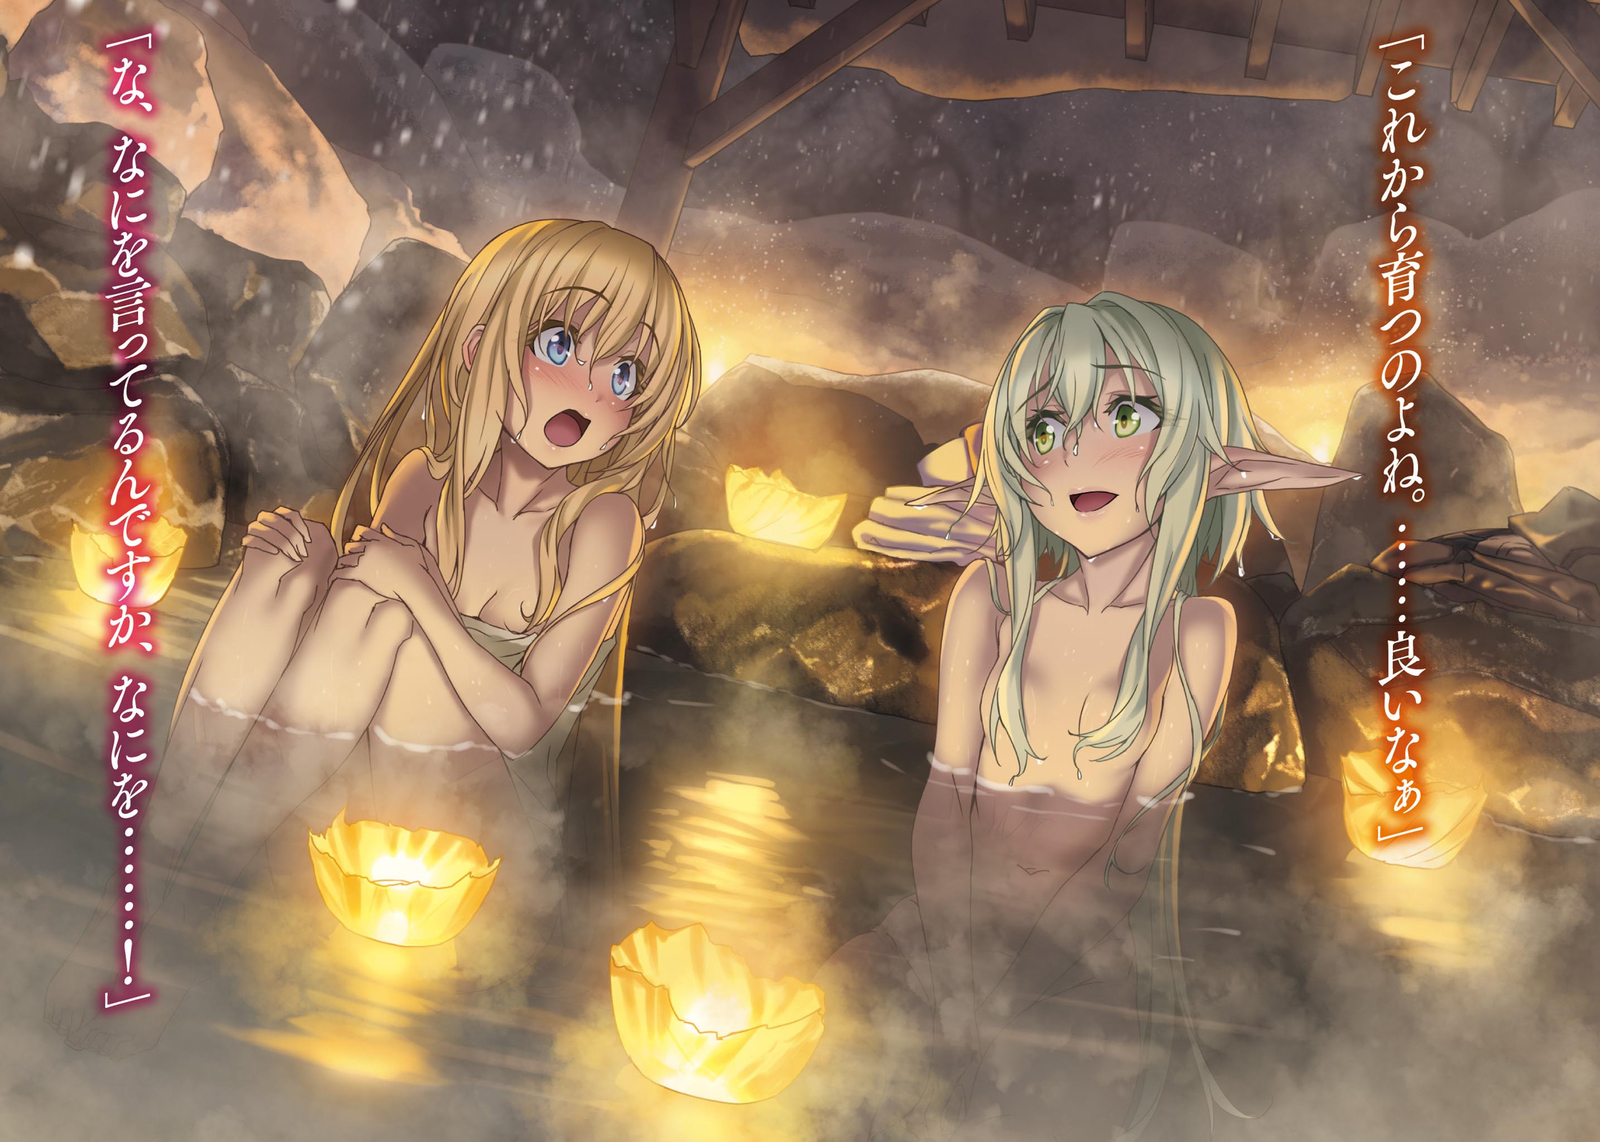 Evening at the hot springs. - NSFW, Anime, Anime art, Goblin slayer, High elf archer, Priestess